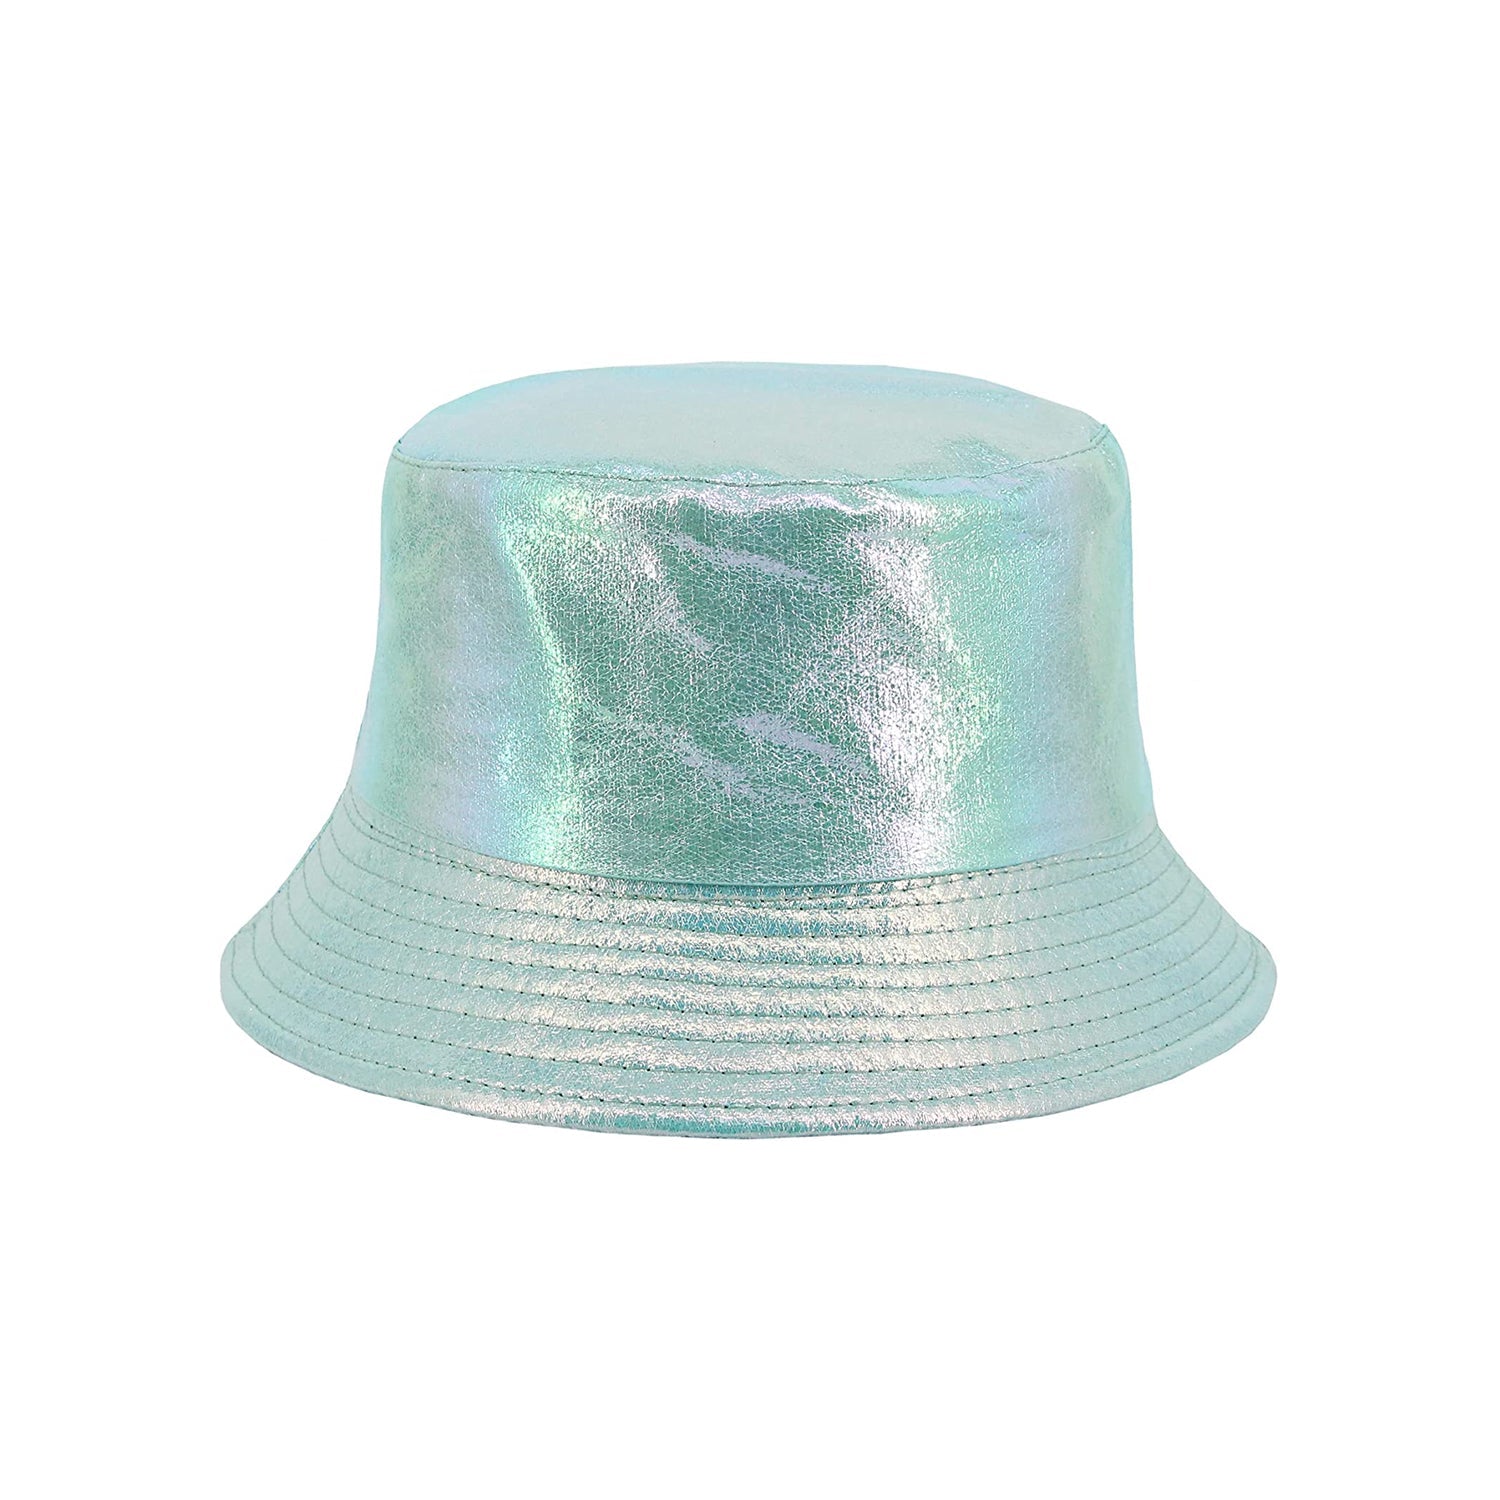 TOPONE ACCESSORIES LIMITED Custom Hologram Waterproof Fisherman Climbing Bucket Hat Topone Accessories Ltd. 